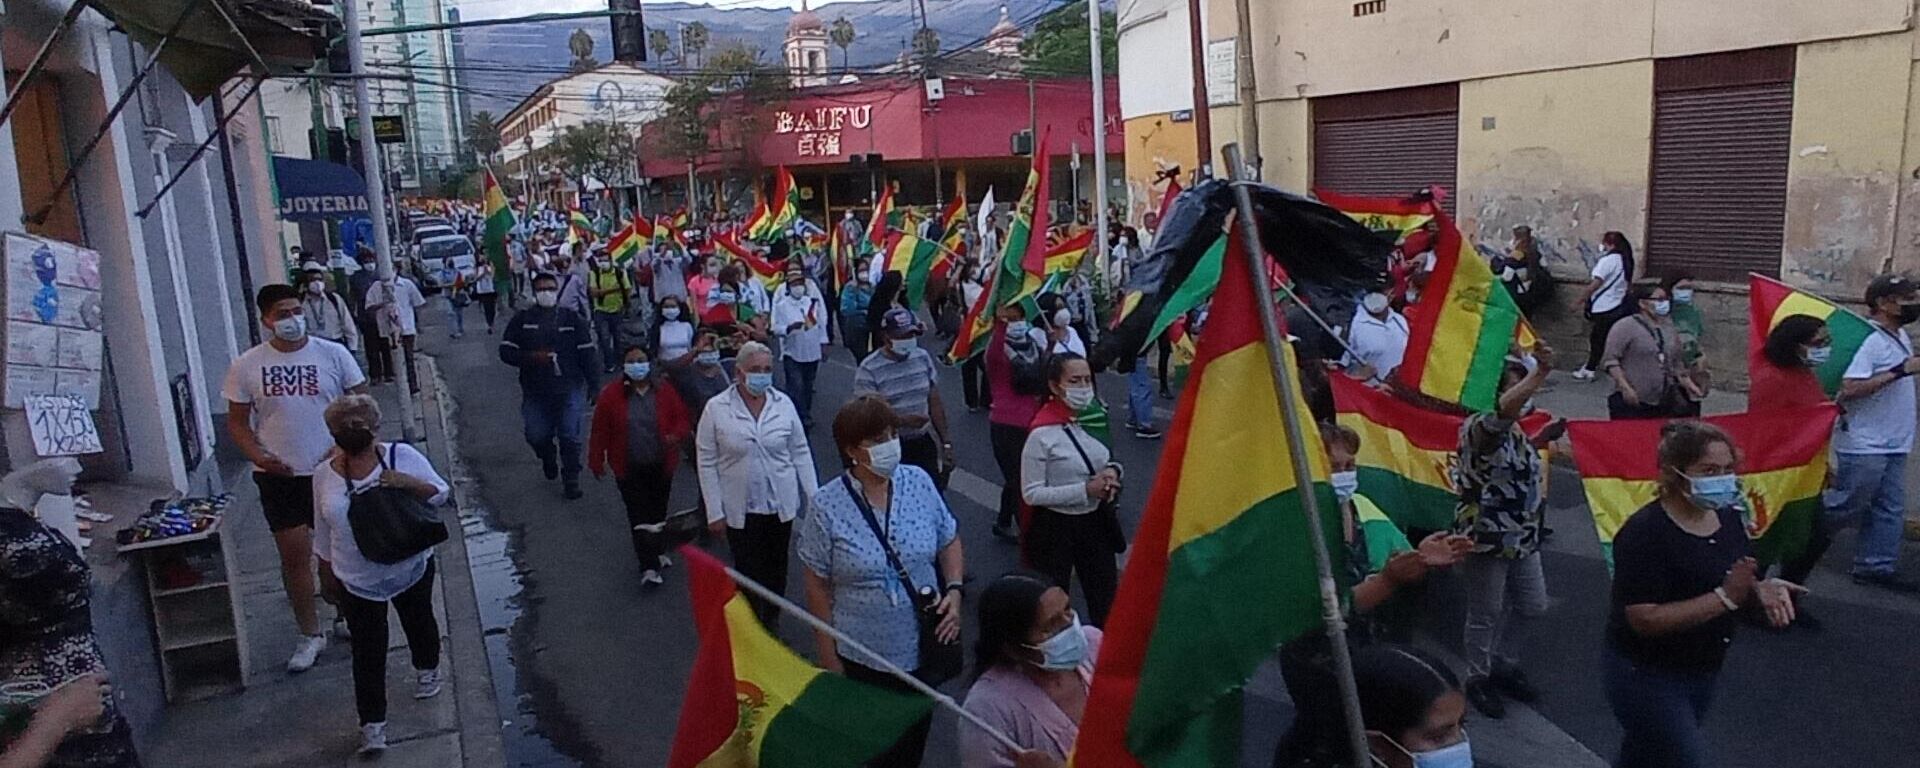 Protestas por el paro en Bolivia - Sputnik Mundo, 1920, 19.11.2021